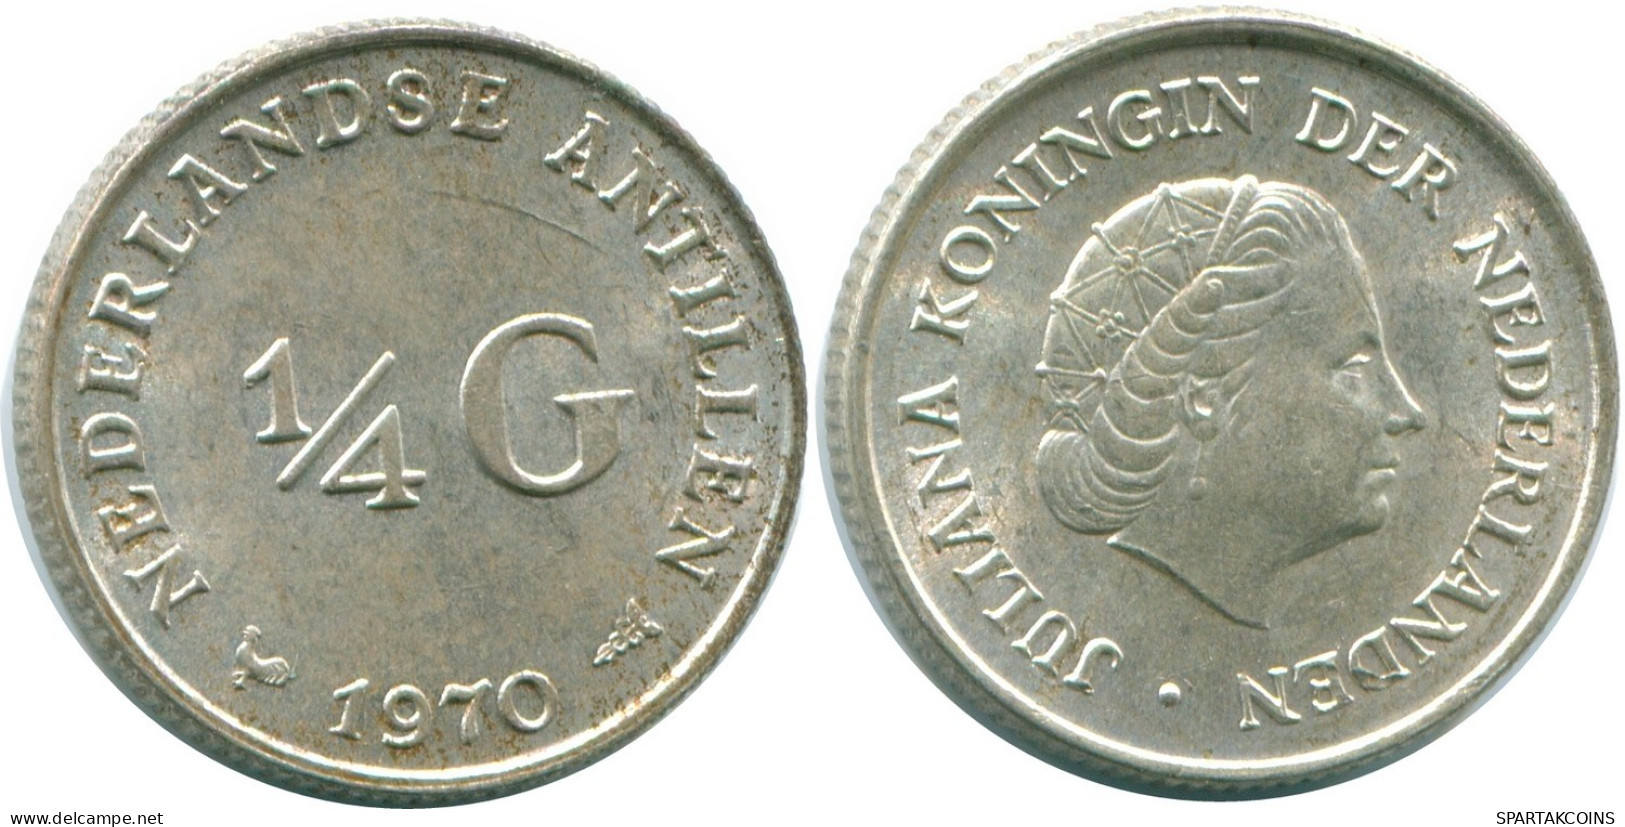 1/4 GULDEN 1970 NETHERLANDS ANTILLES SILVER Colonial Coin #NL11627.4.U.A - Niederländische Antillen